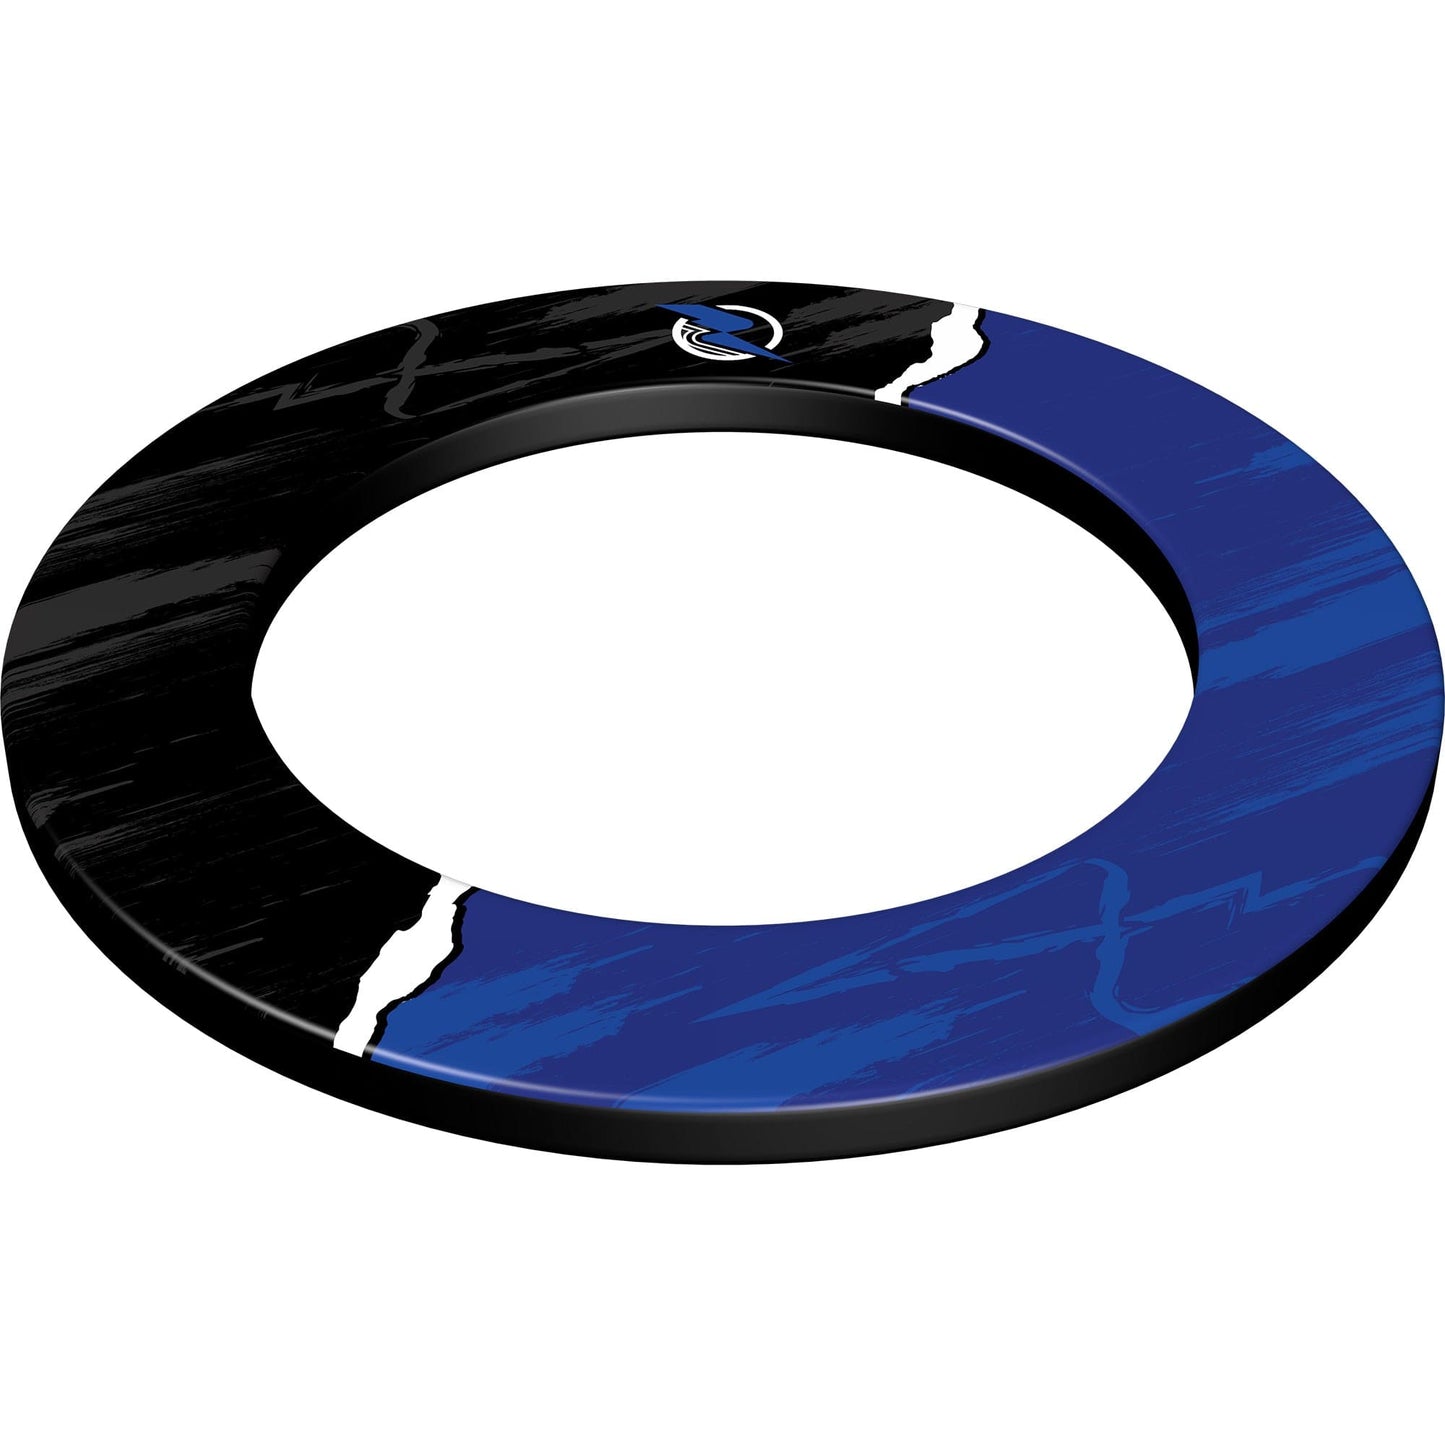 Ruthless Dartboard Surround - Professional - RipTorn - Black & Blue